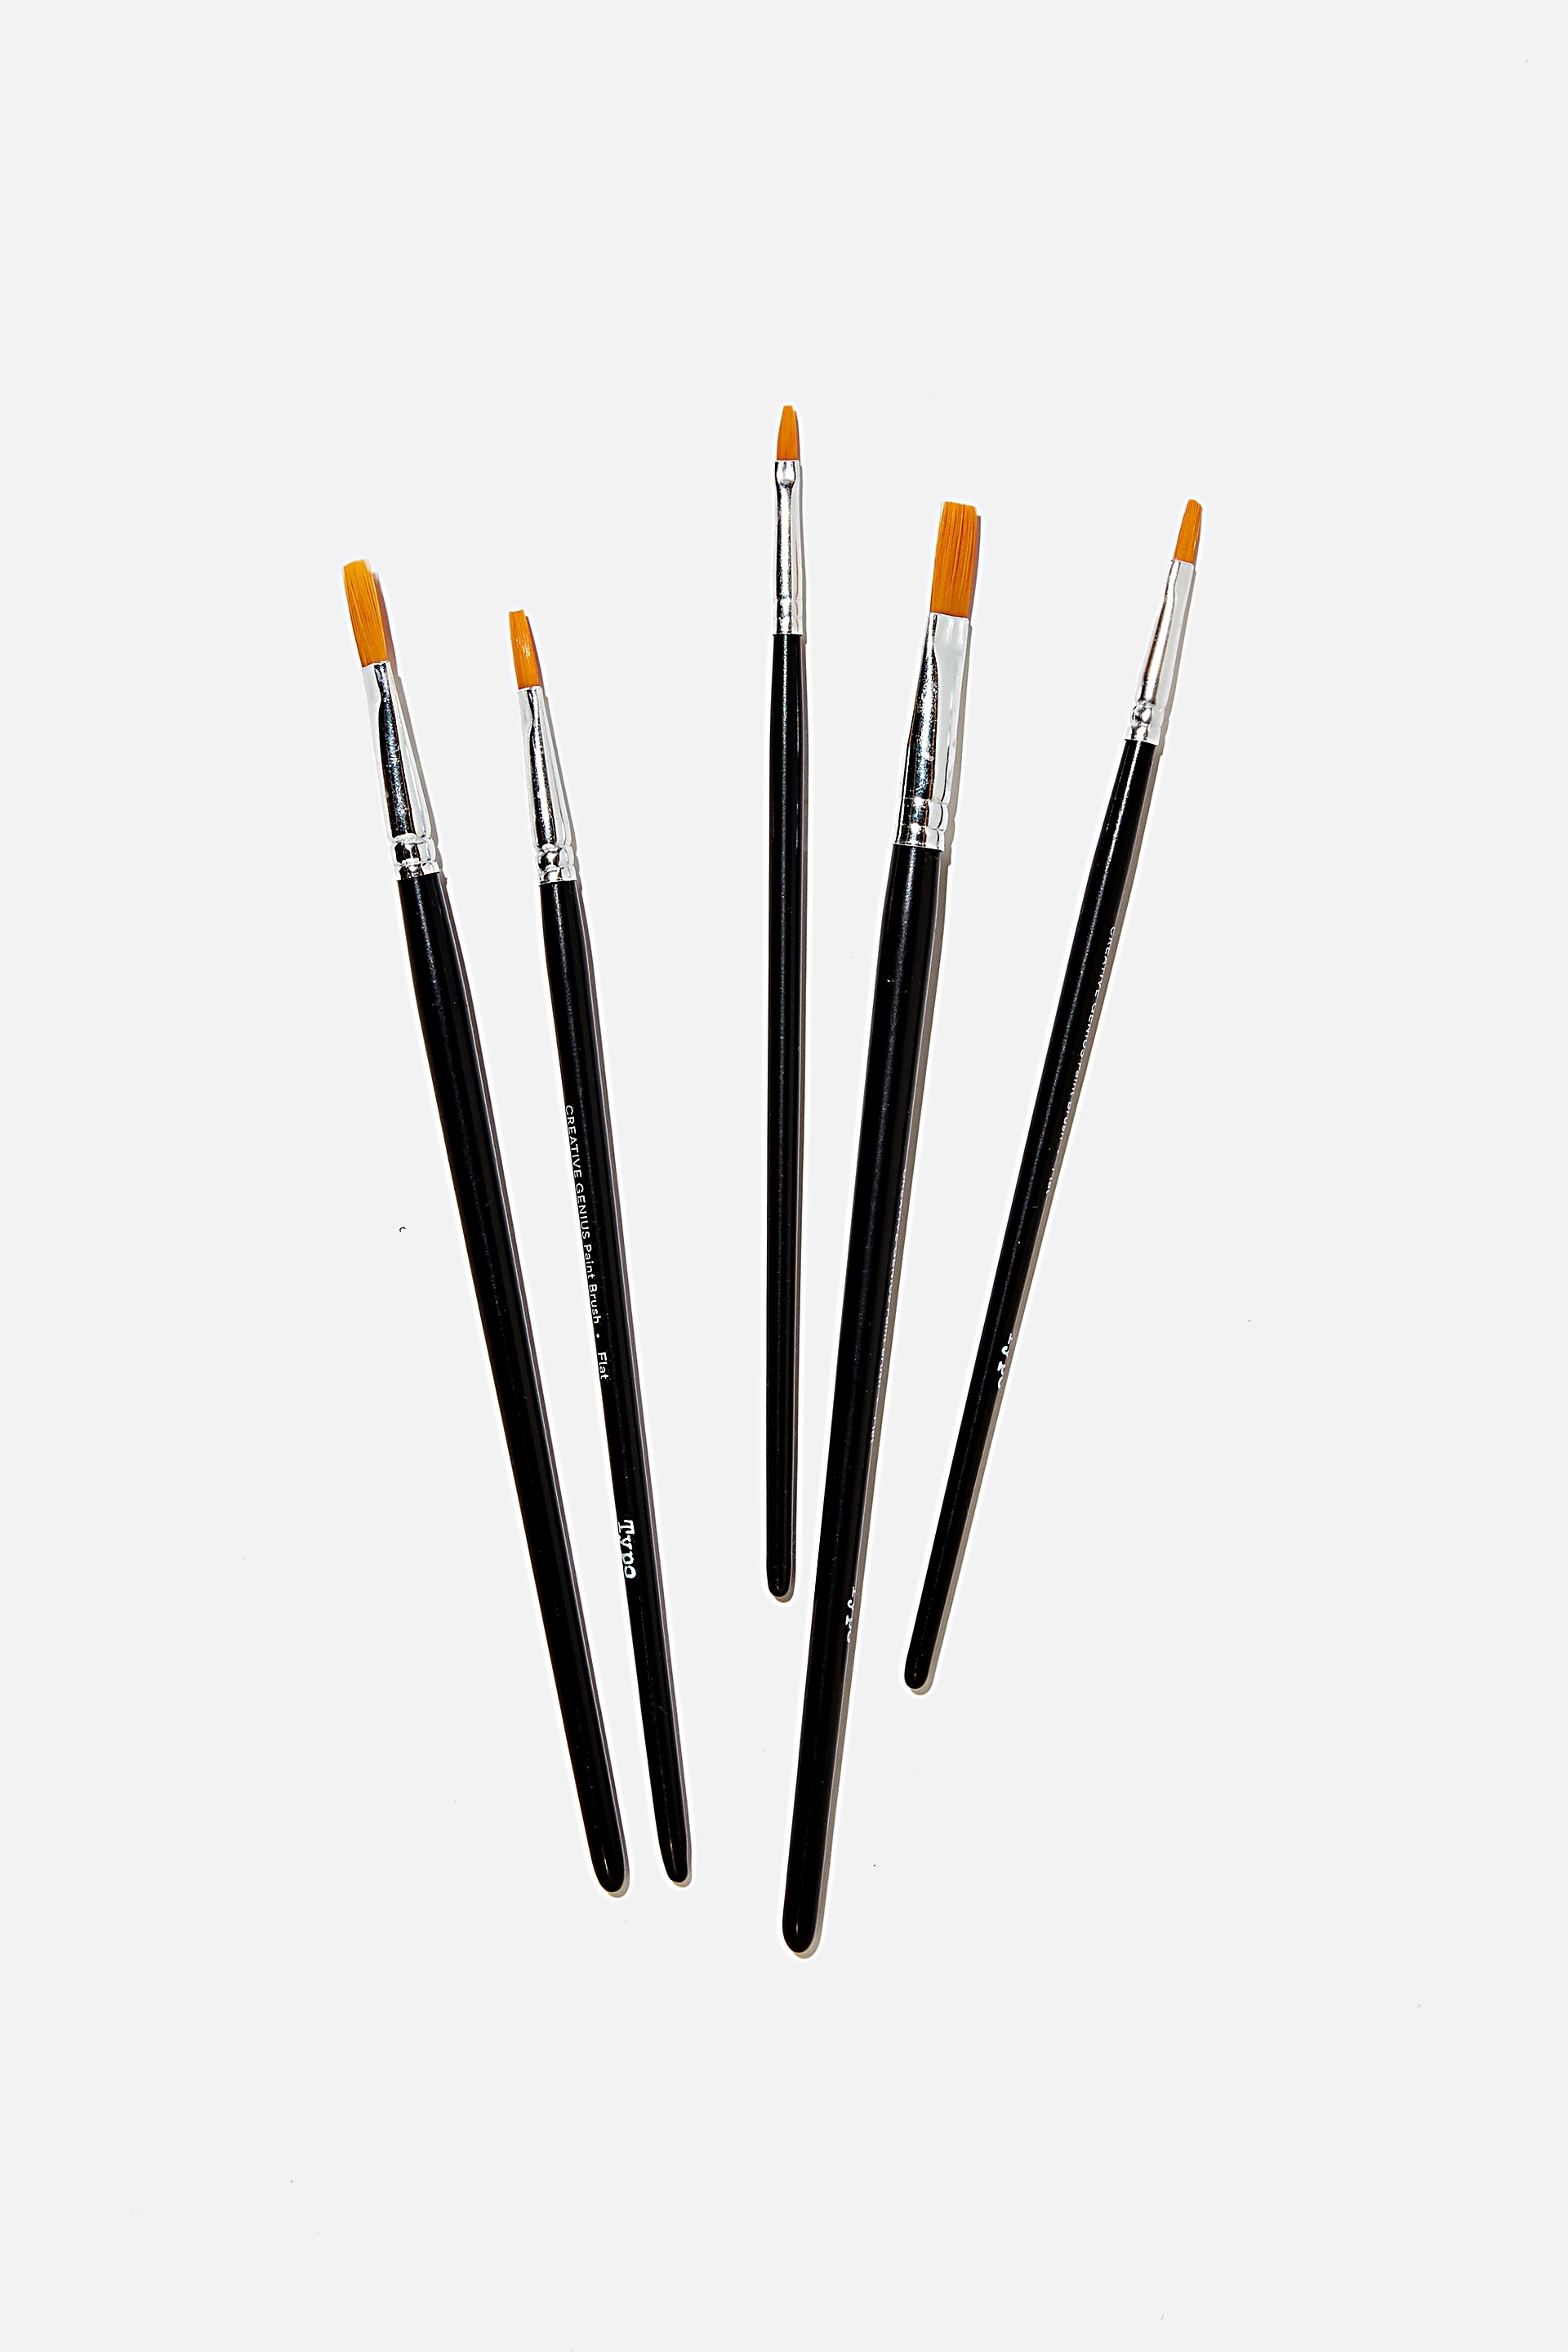 Typo - Paint Brush 5 Set - Black